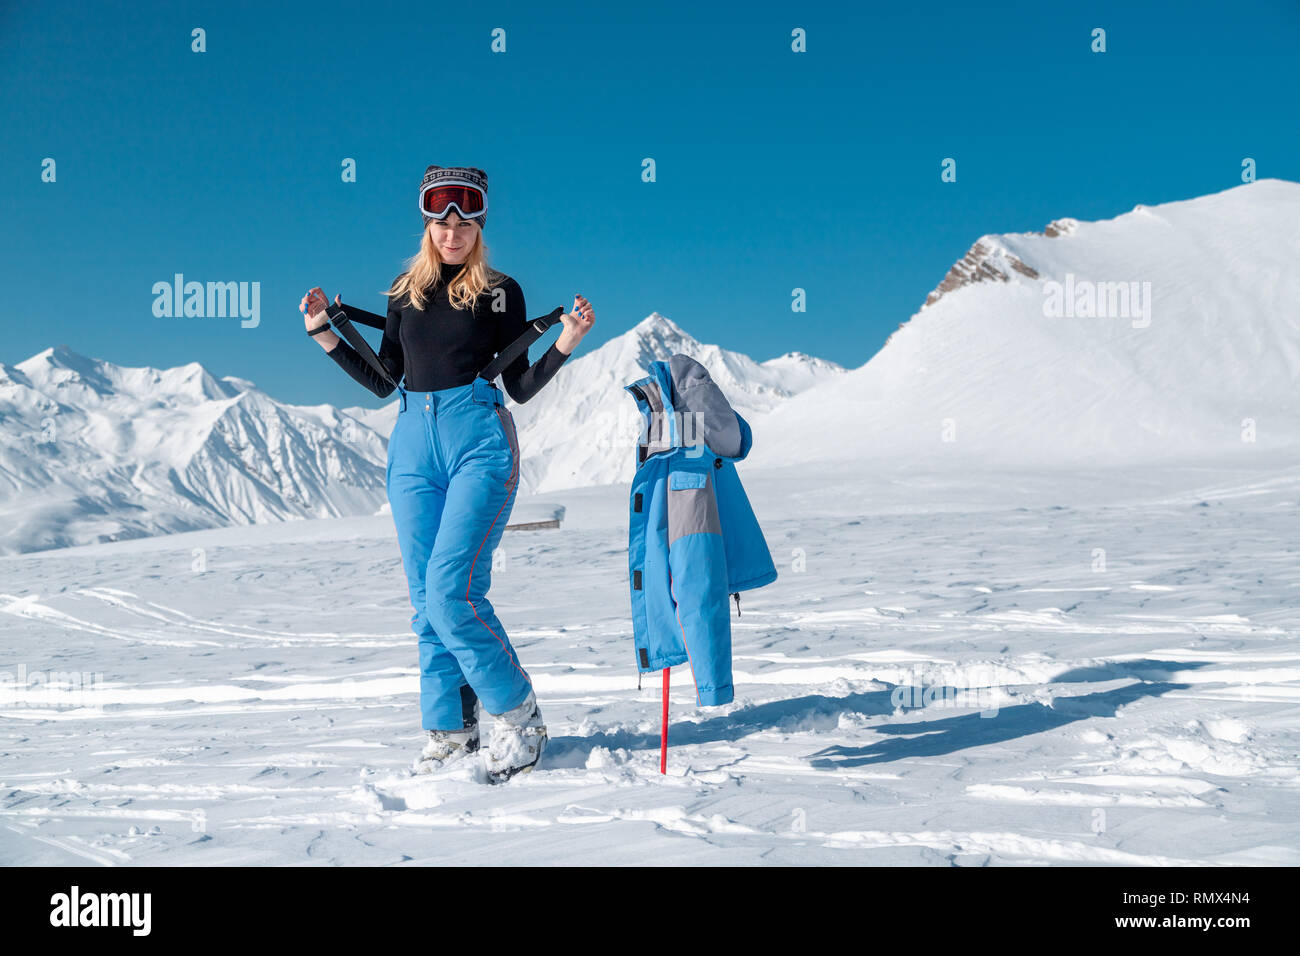 450 ideas de Ski outfit  esquí, ropa esqui, la moda de esquí